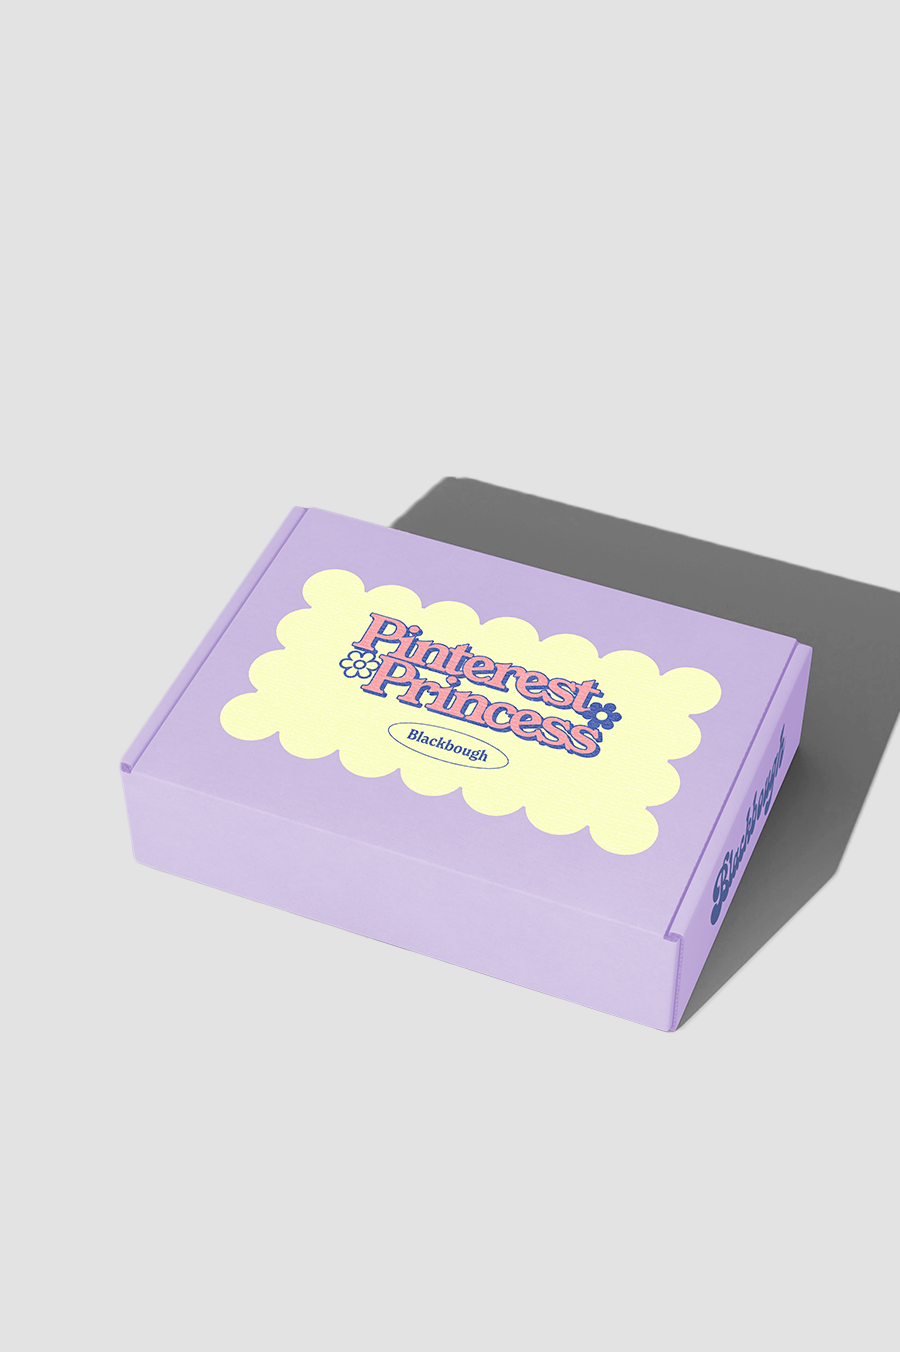 Blackbough Gift Box / Pinterest Princess